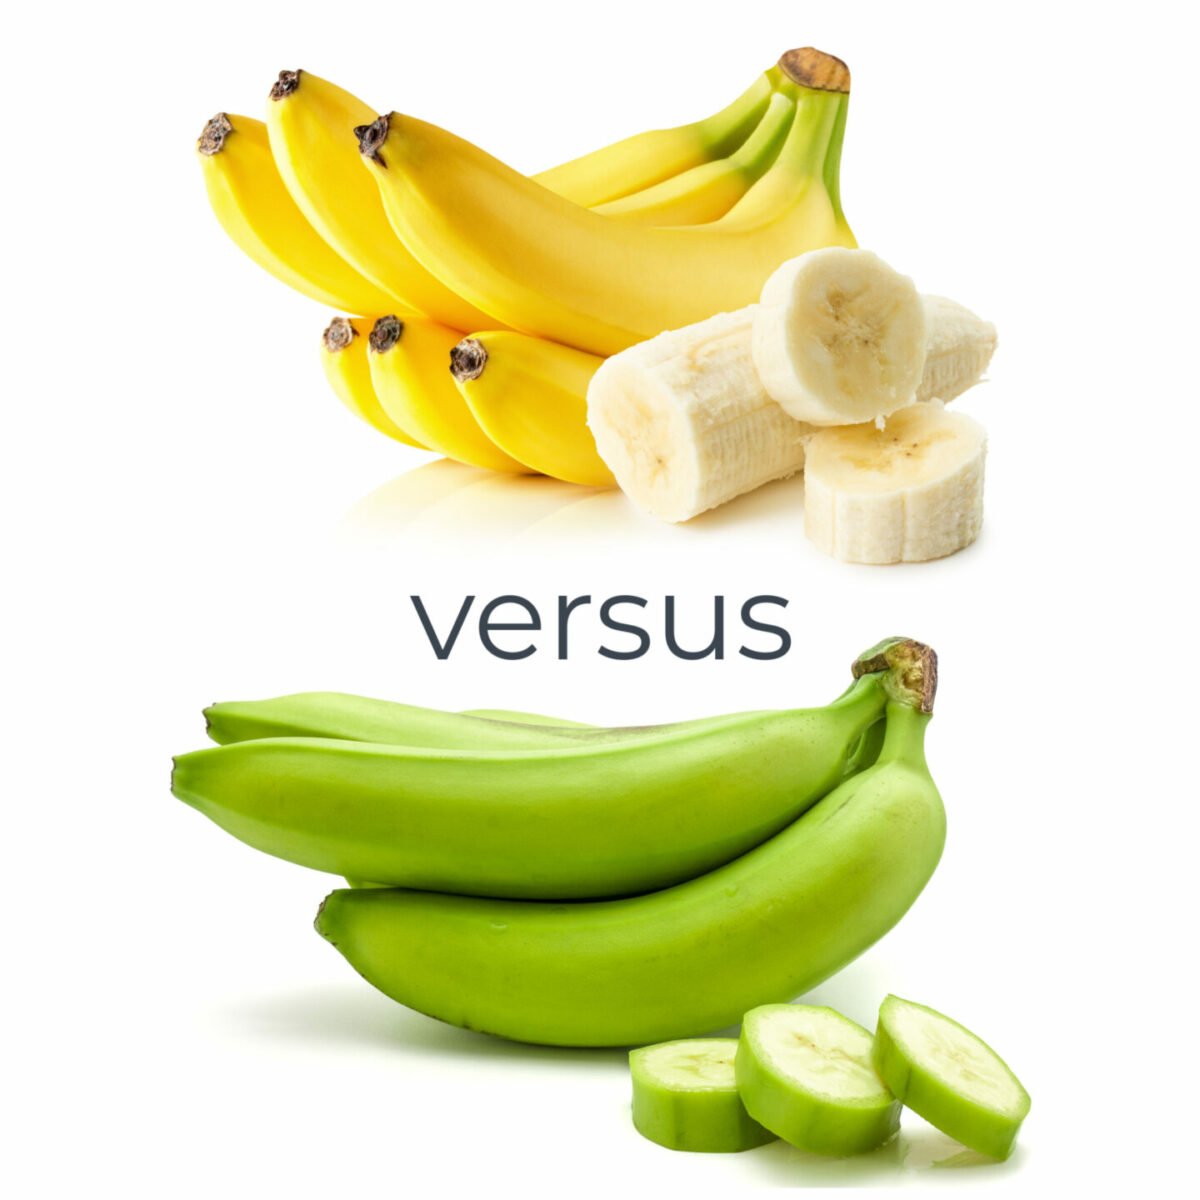 banana versus plantain